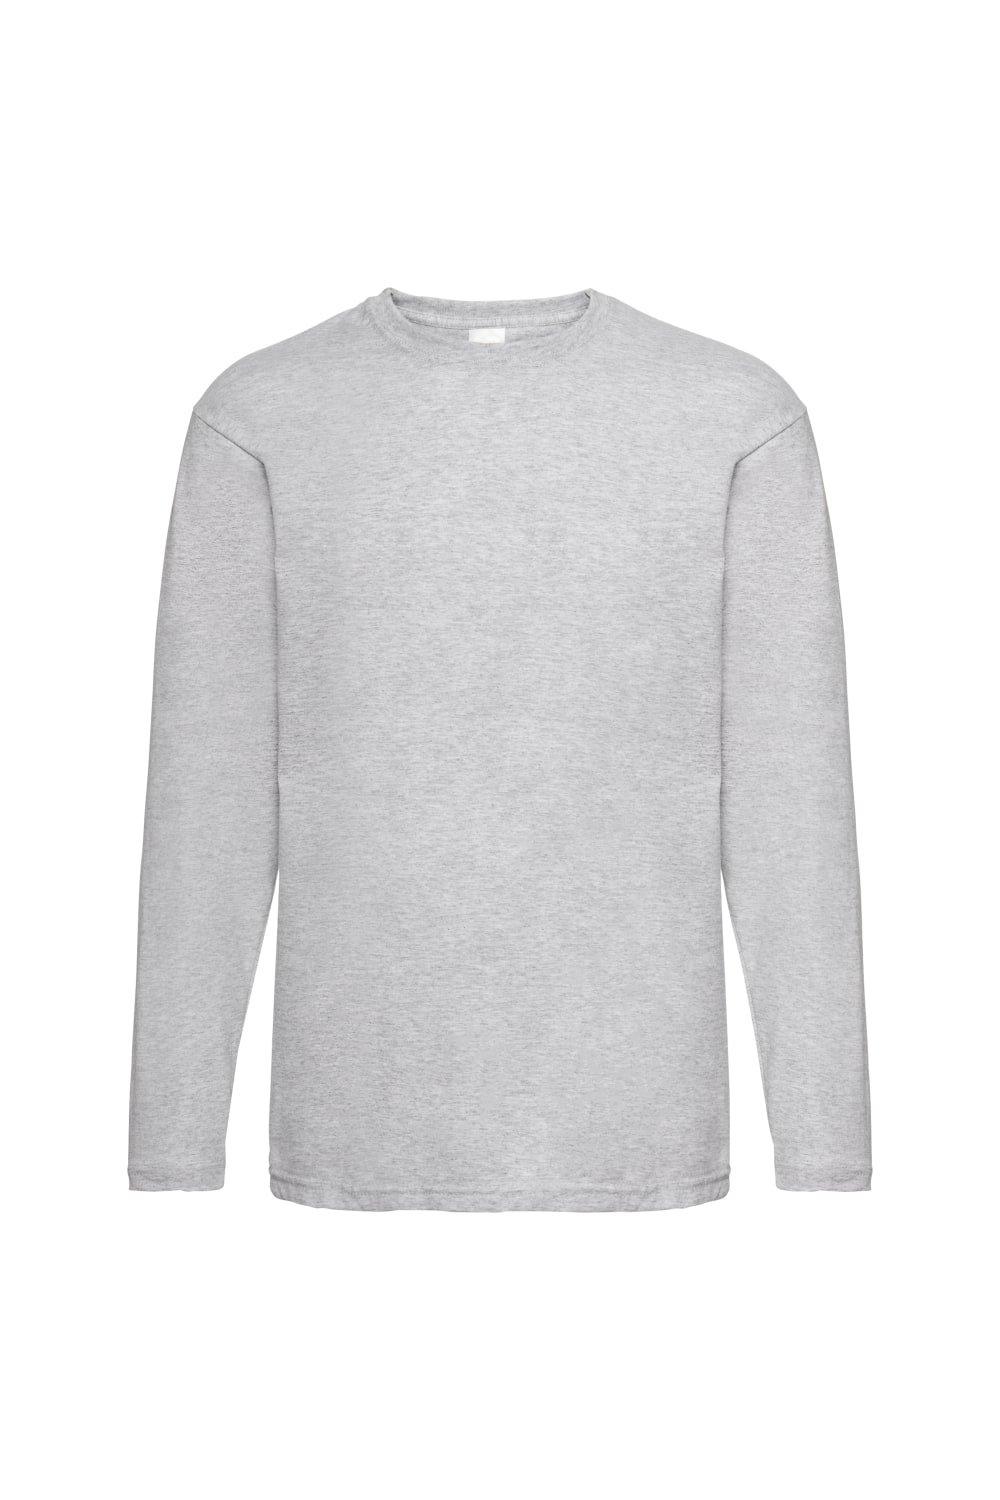 Повседневная футболка Value с длинным рукавом Universal Textiles, серый мужская футболка лиса русская краса xl серый меланж